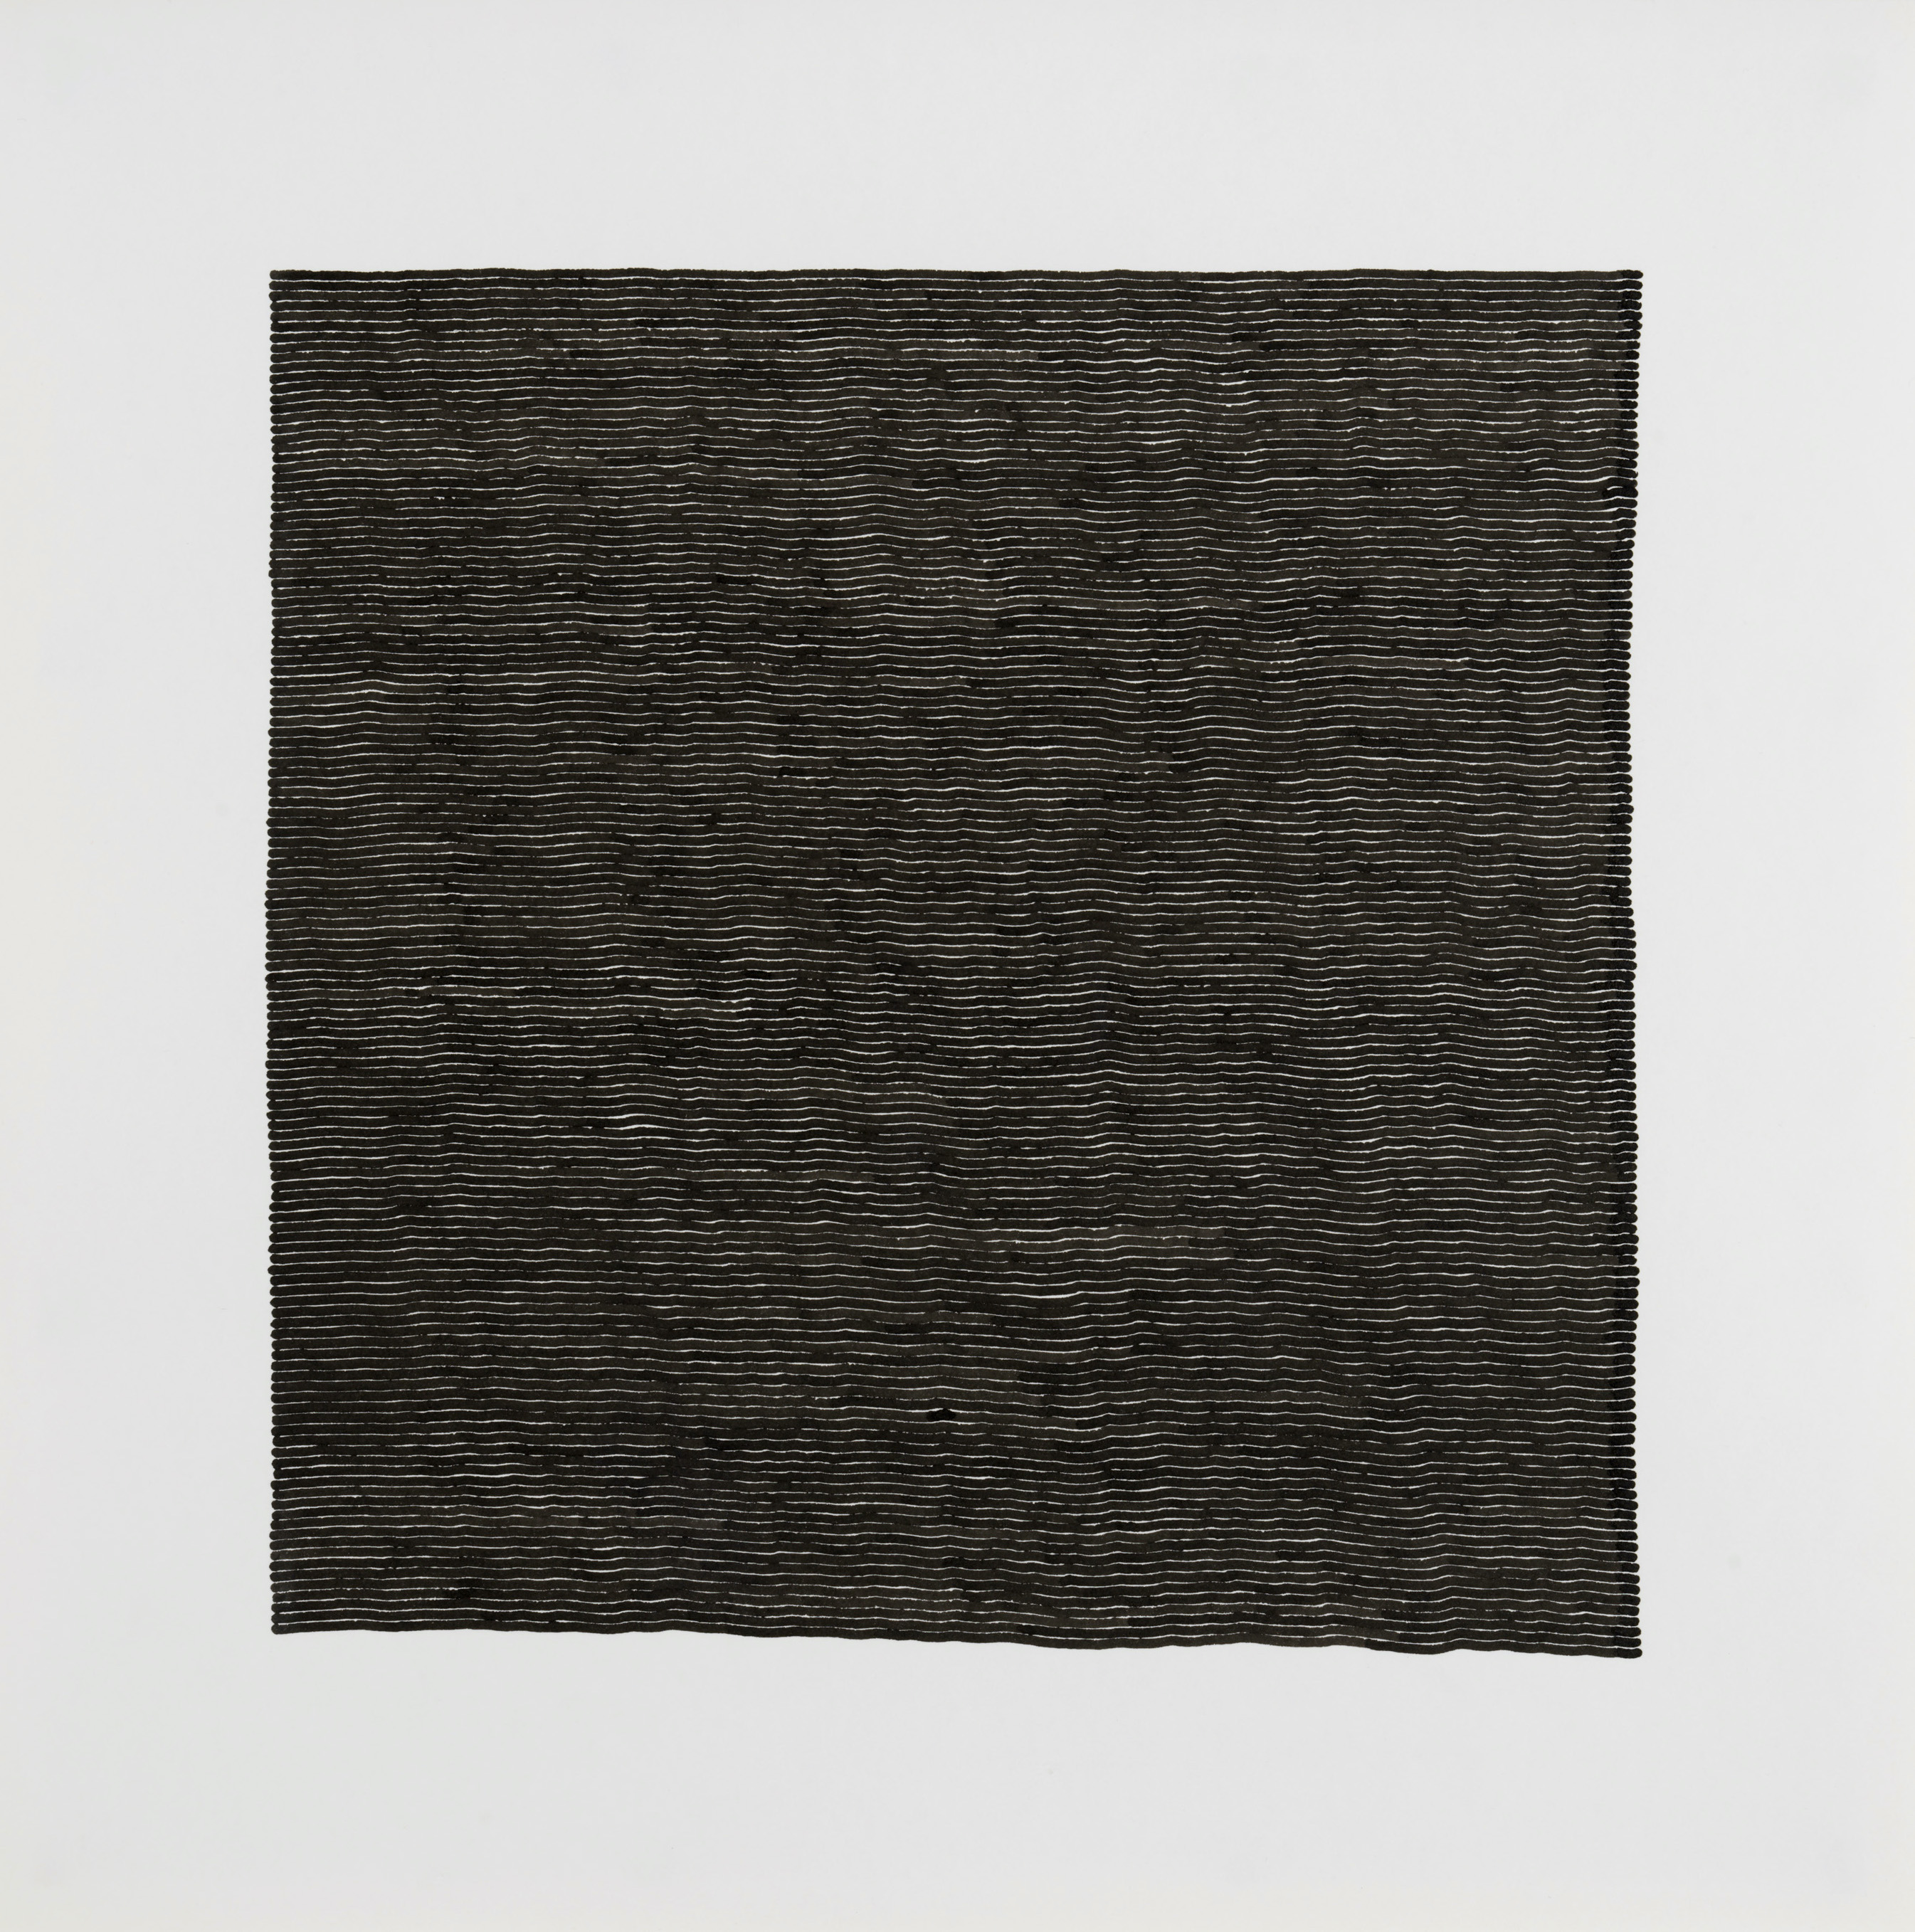 David Connearn, Five Drawings (2.0mm line), black ink on 300gsm Heritage Rag paper, 42x42cm, 2019